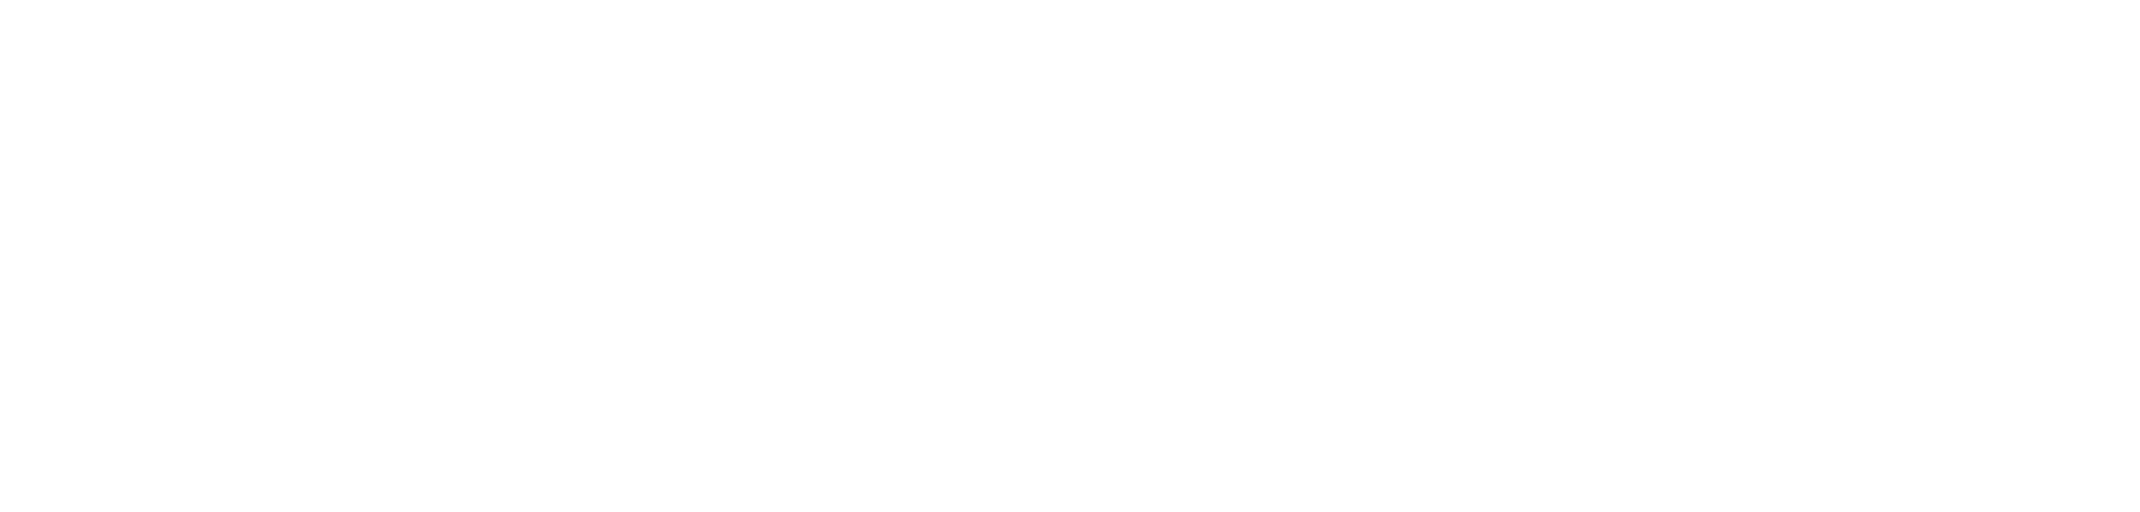 Fallible logo